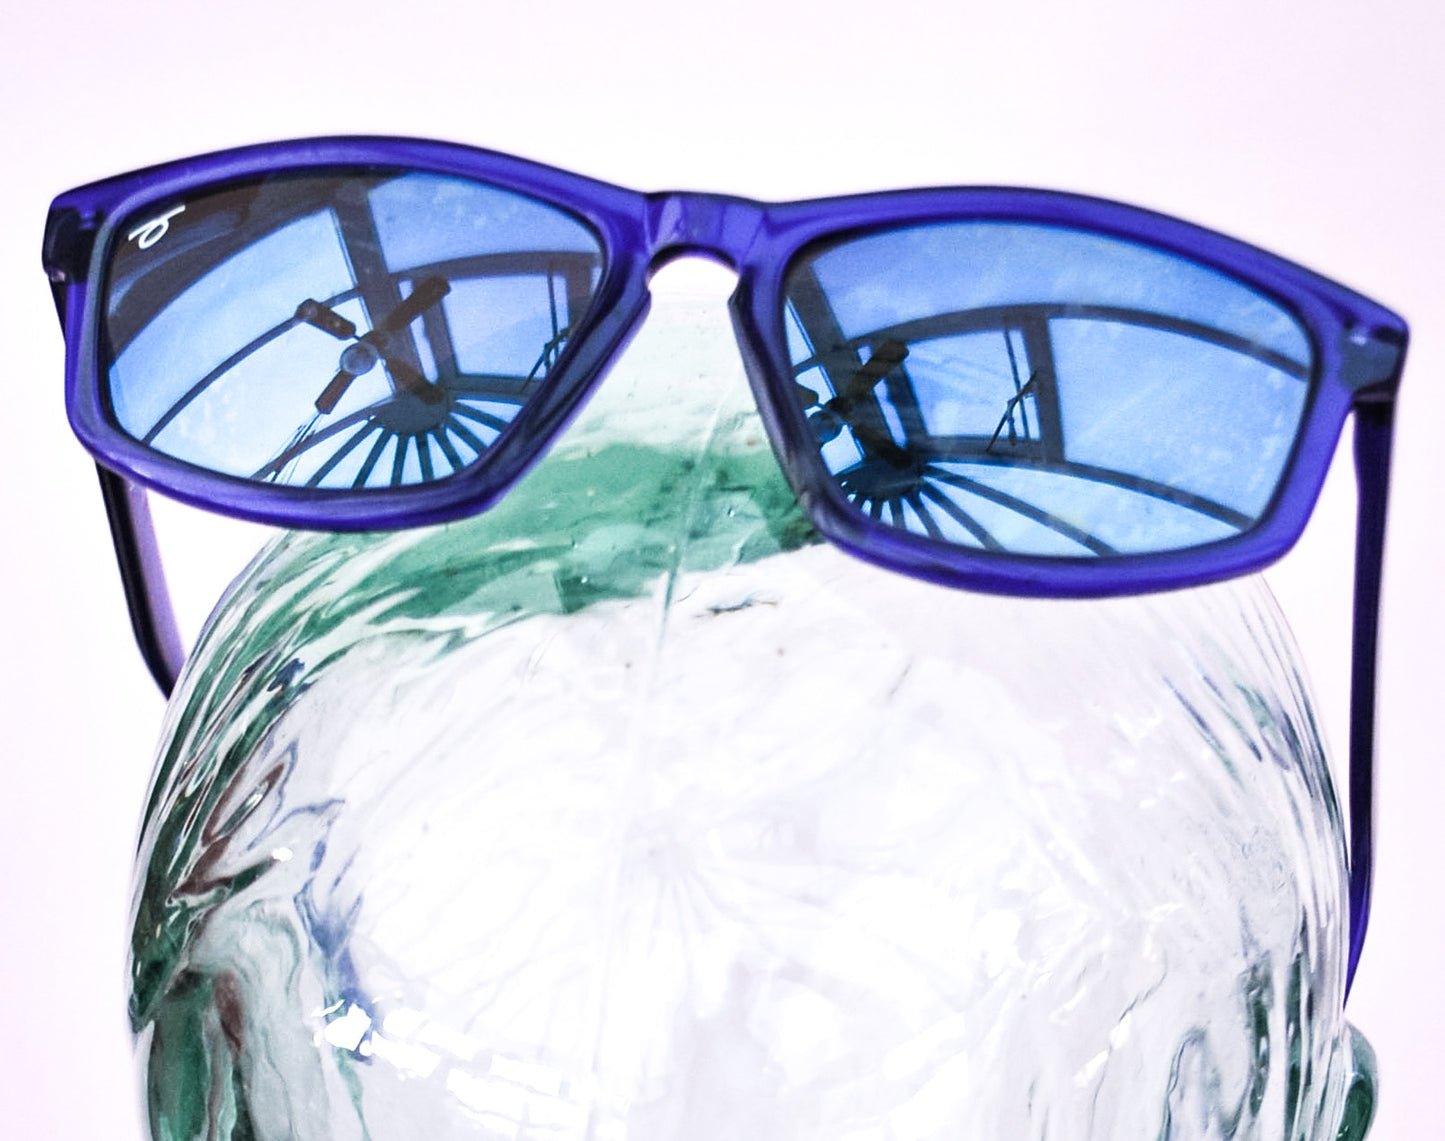 1990s Rare Killer Loop Wayfarer Mirrored Sunglasses in Violet Blue